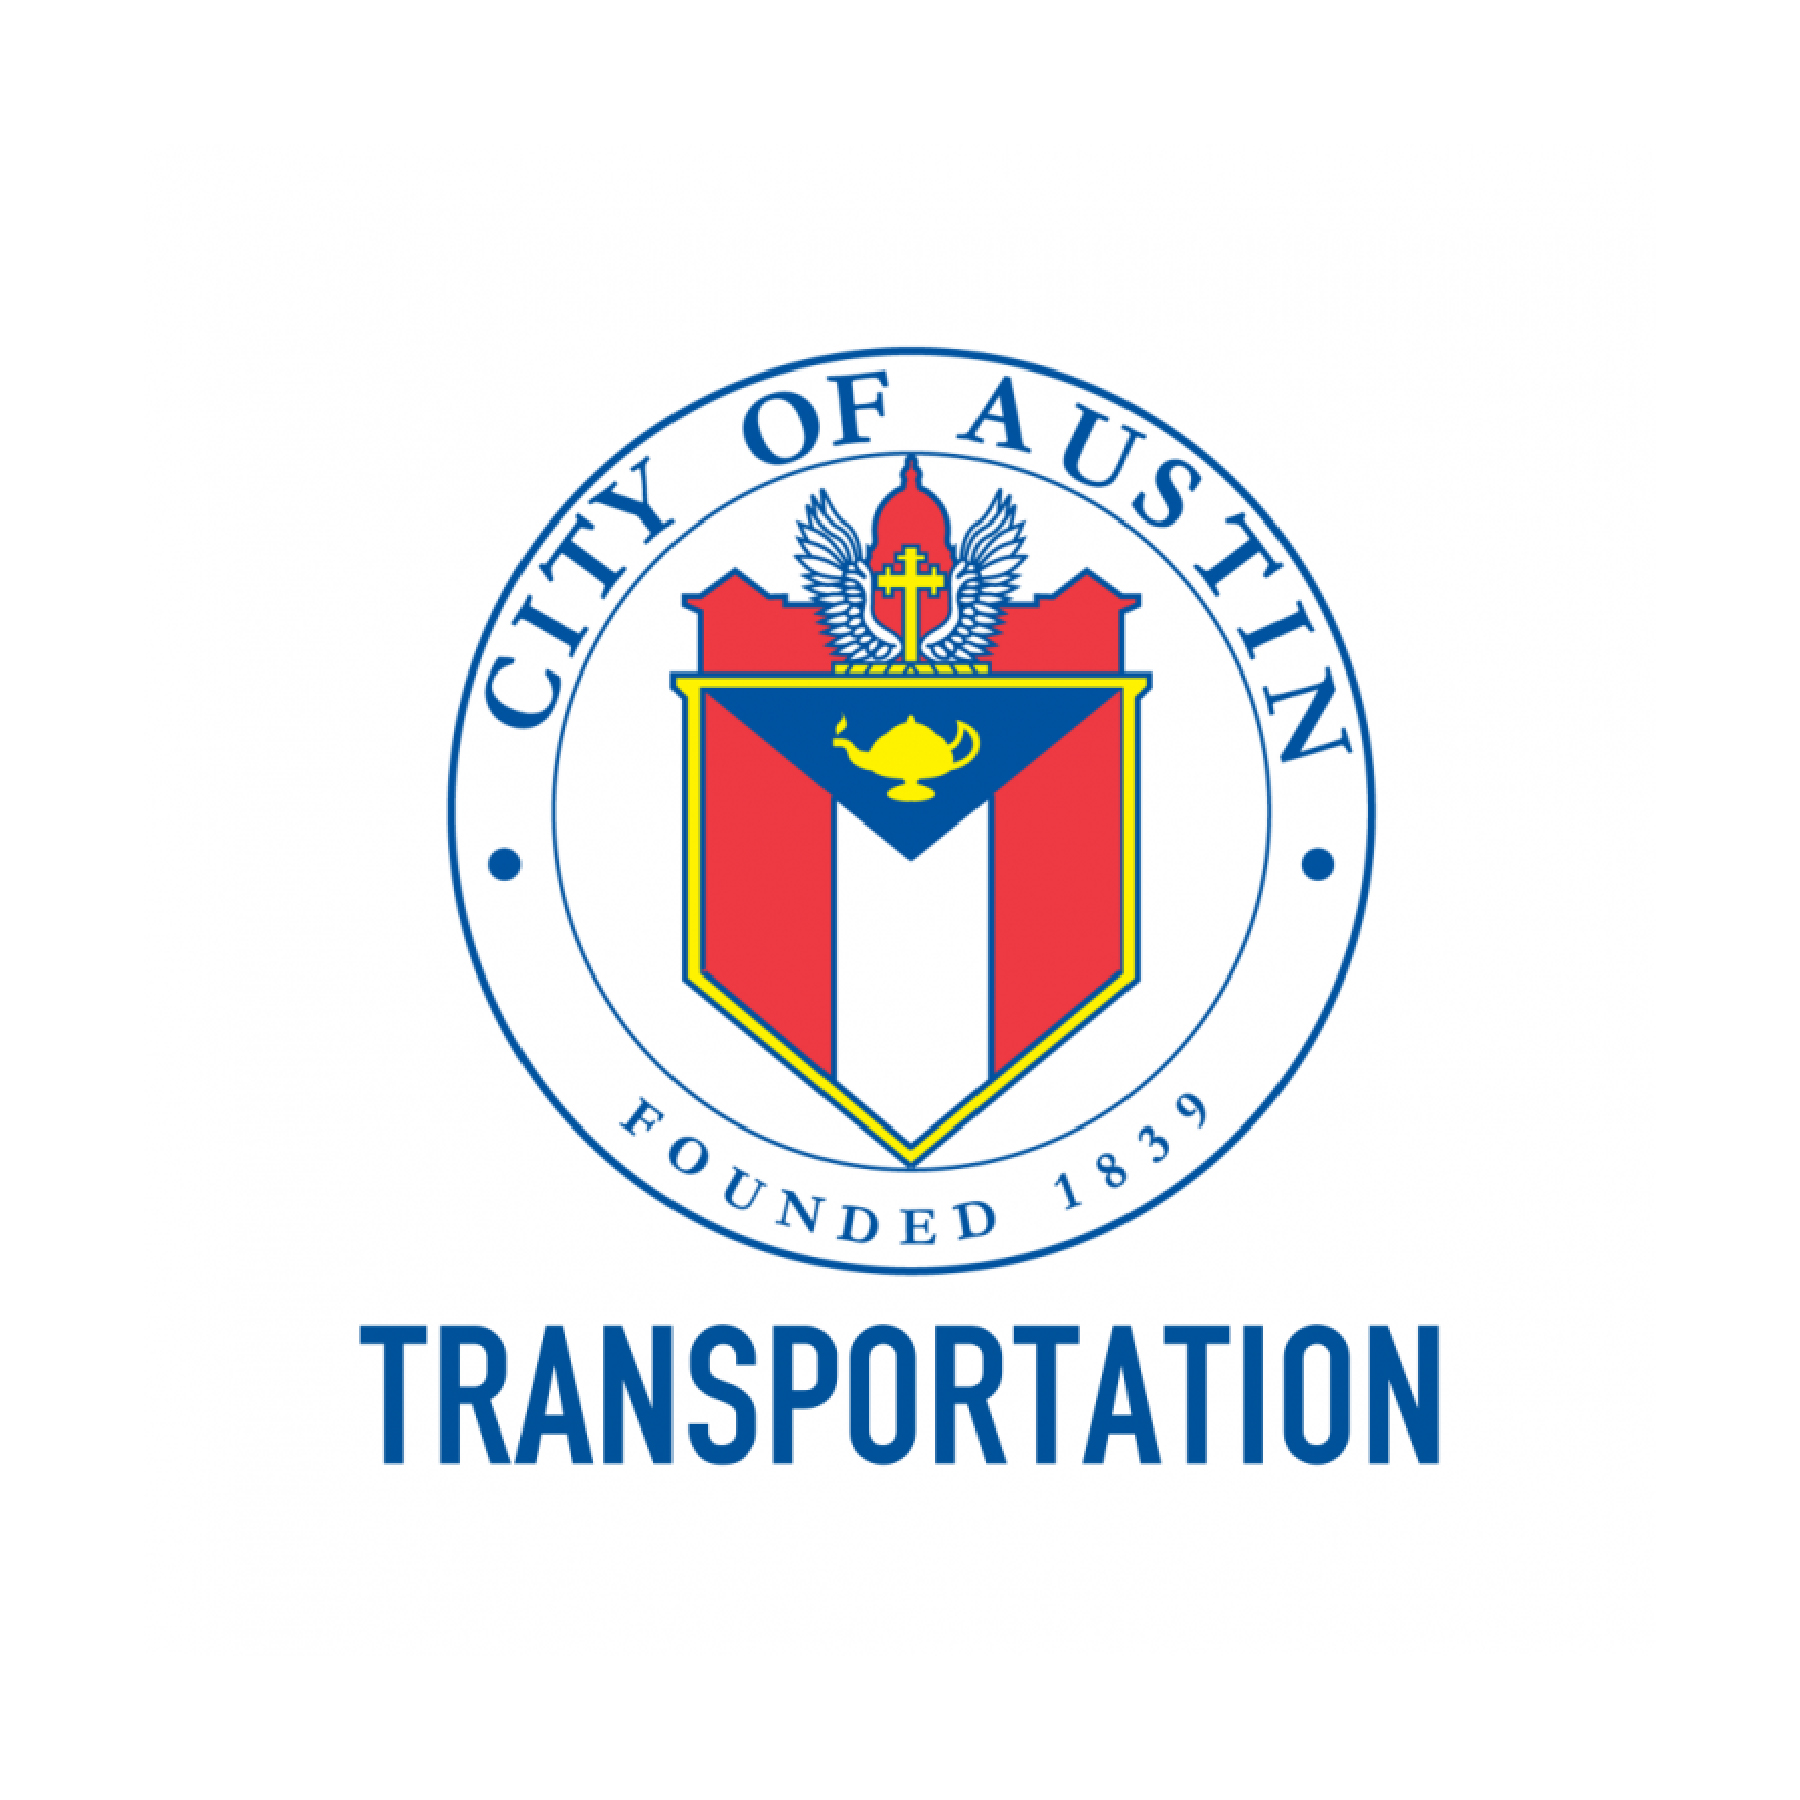 City of Austin Transportation Department logo